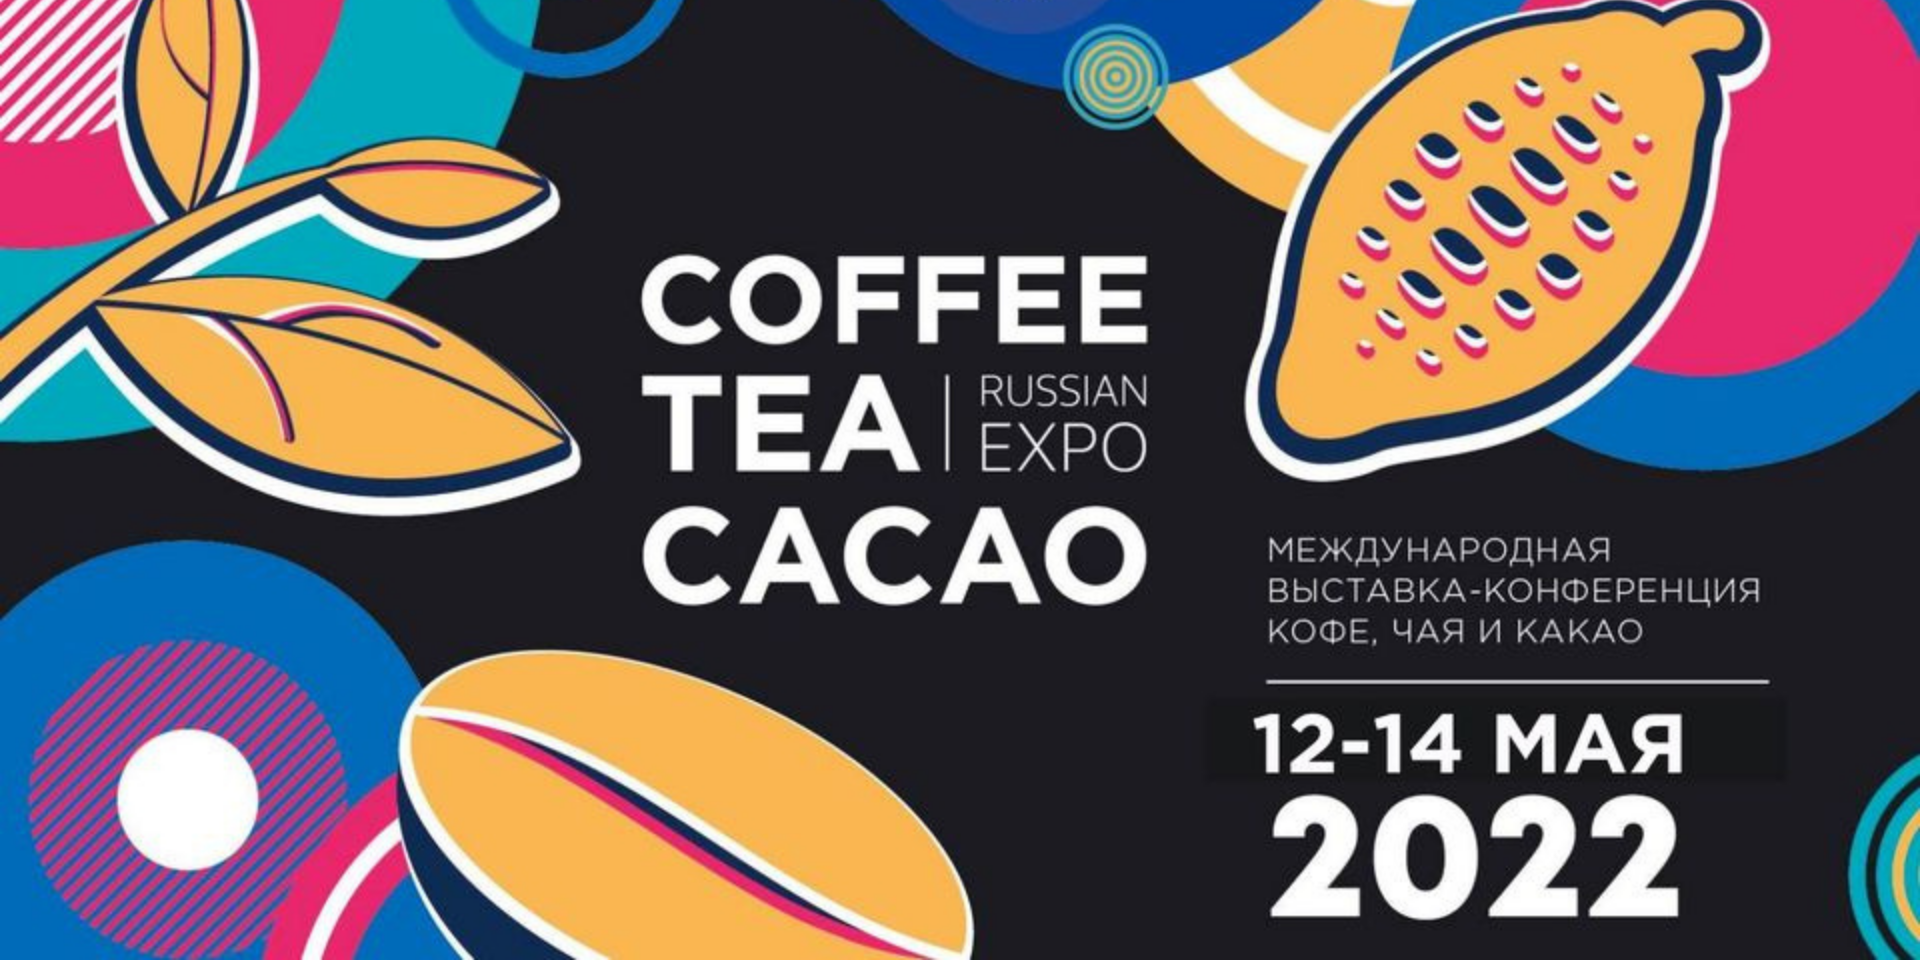 Coffee Tea Cacao Russian Expo 2022